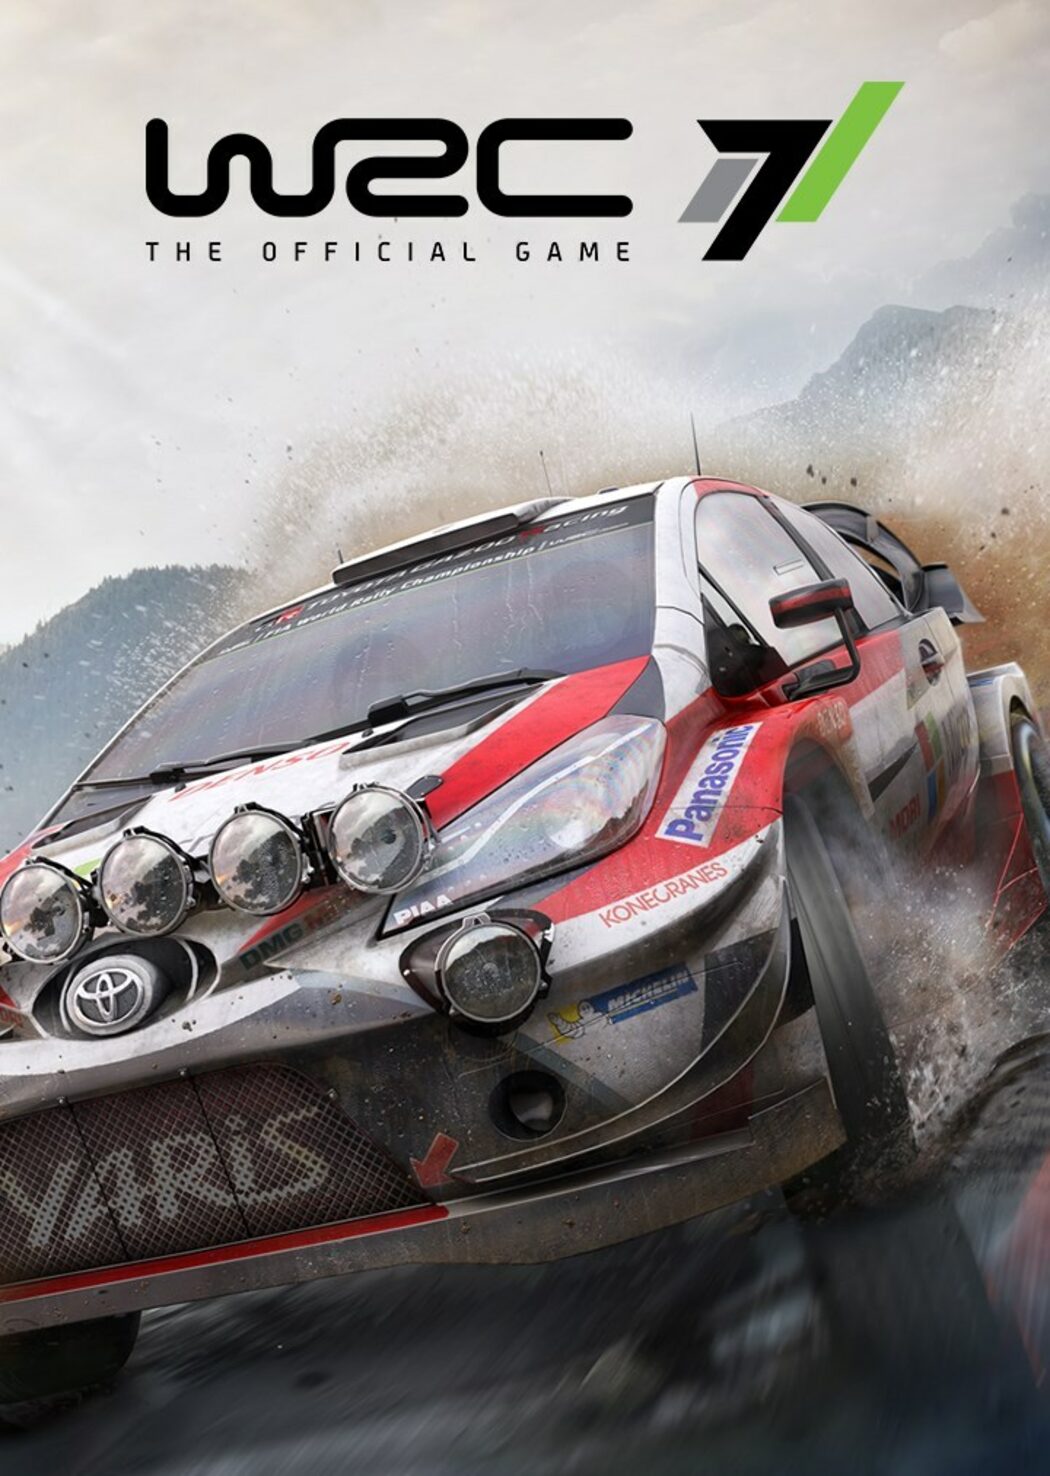 wrc 9 fia world rally championship cover